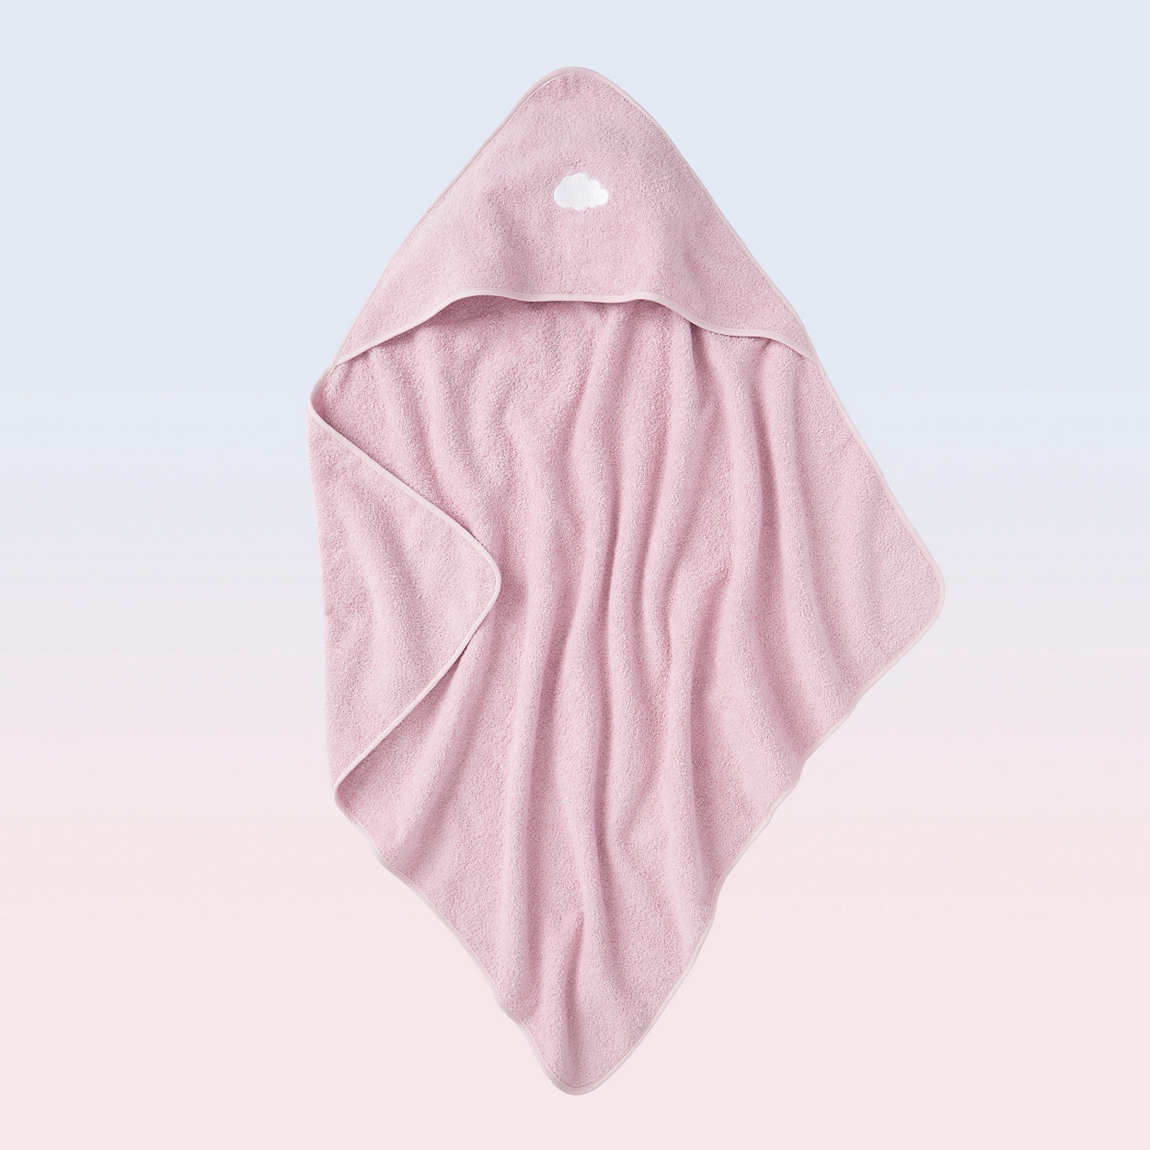 Pink Towel